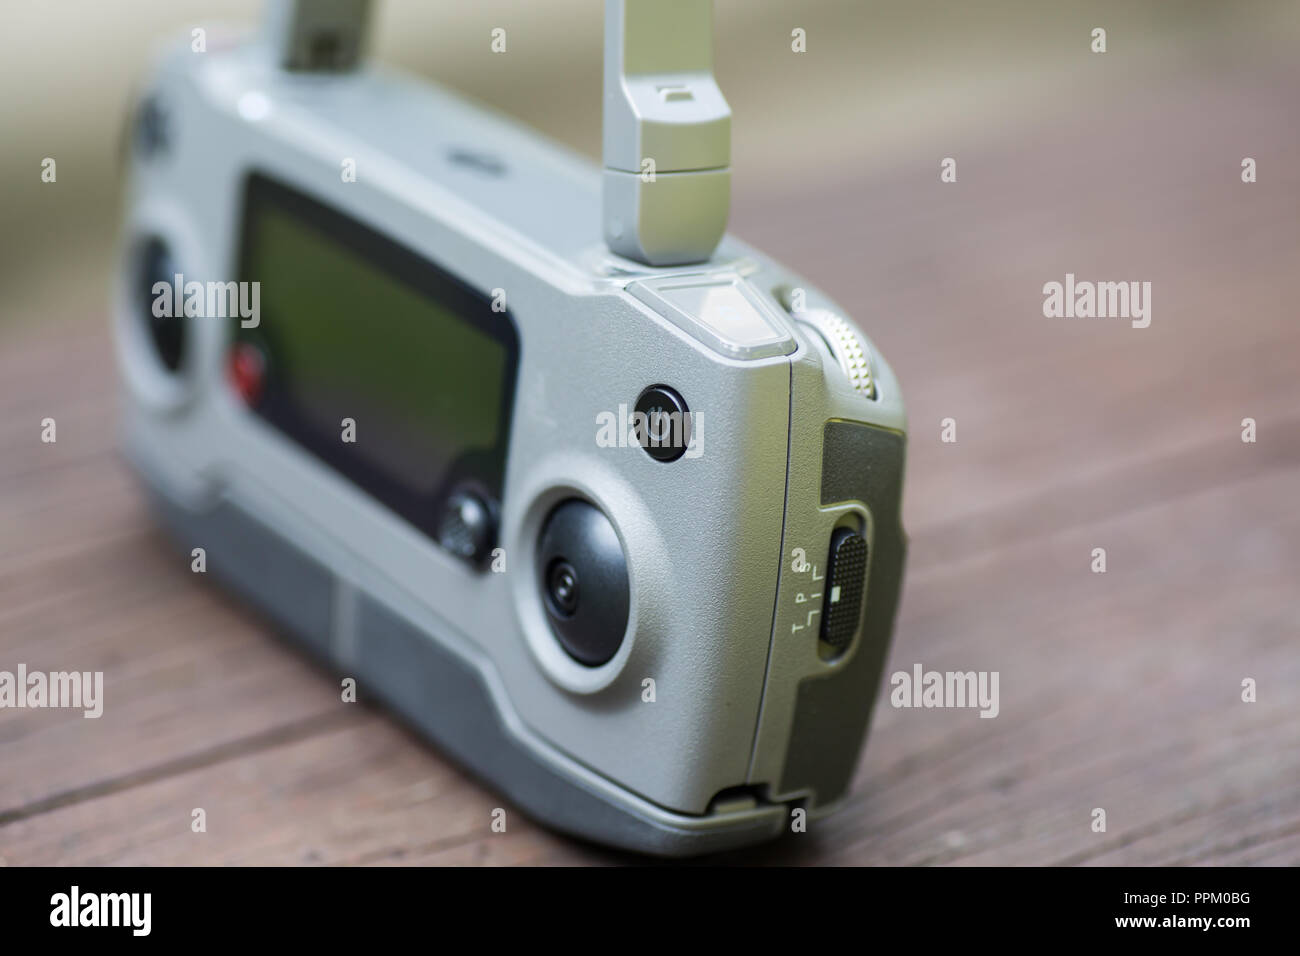 View of Mavic 2 pro remote controller by DJI Stock Photo - Alamy